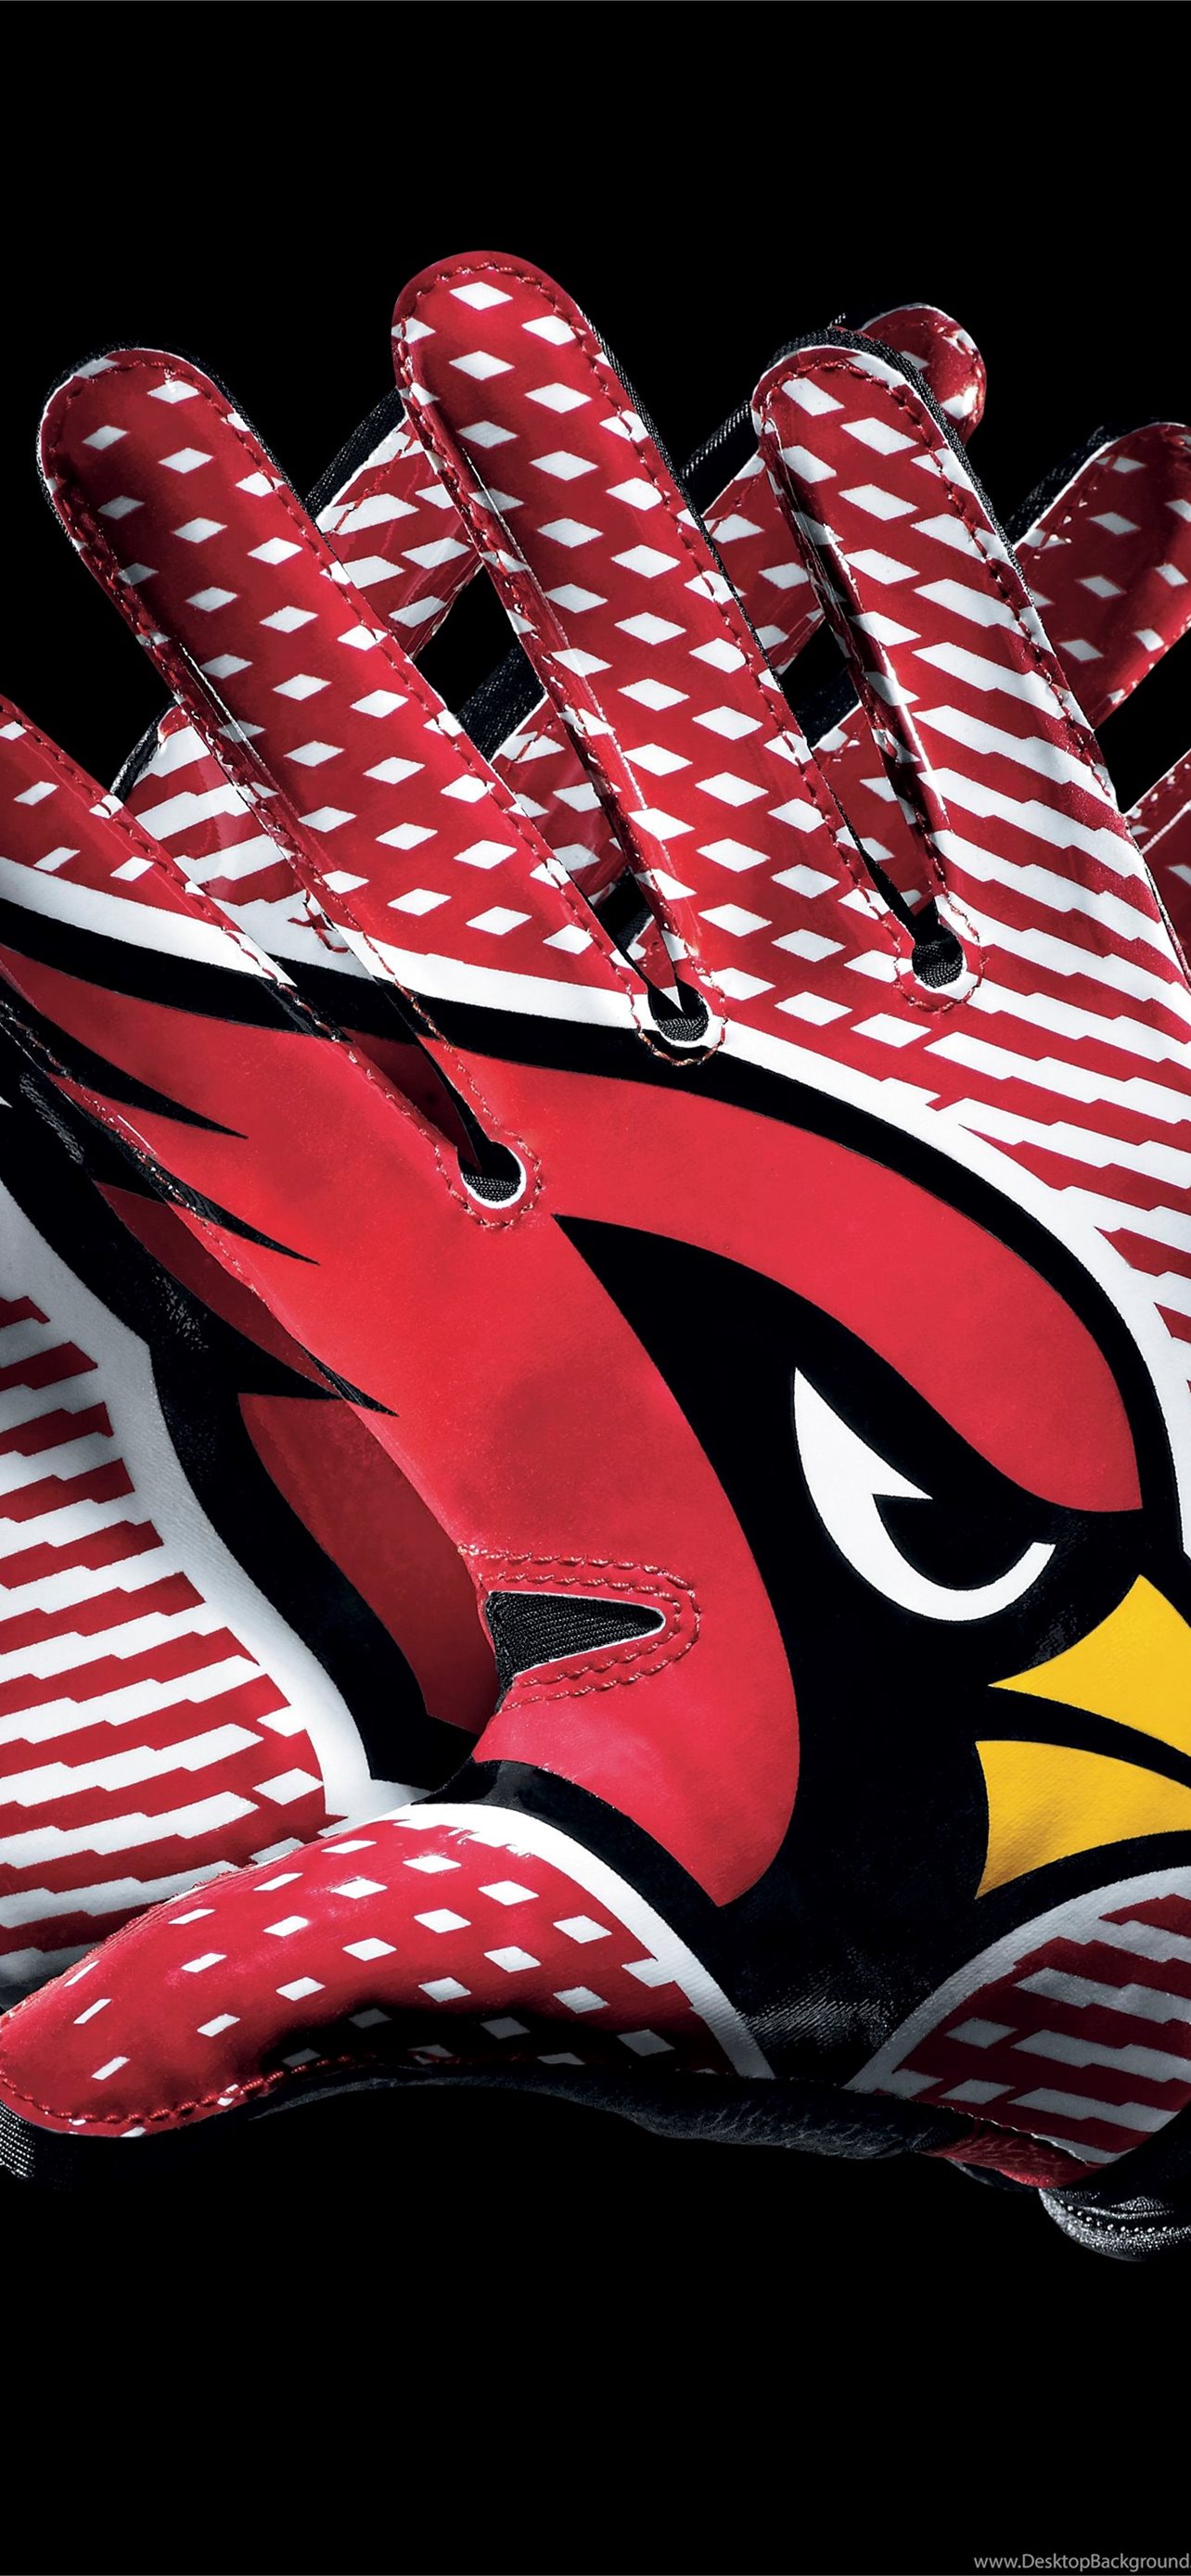 Wallpaper wallpaper sport logo NFL Arizona Cardinals images for  desktop section спорт  download